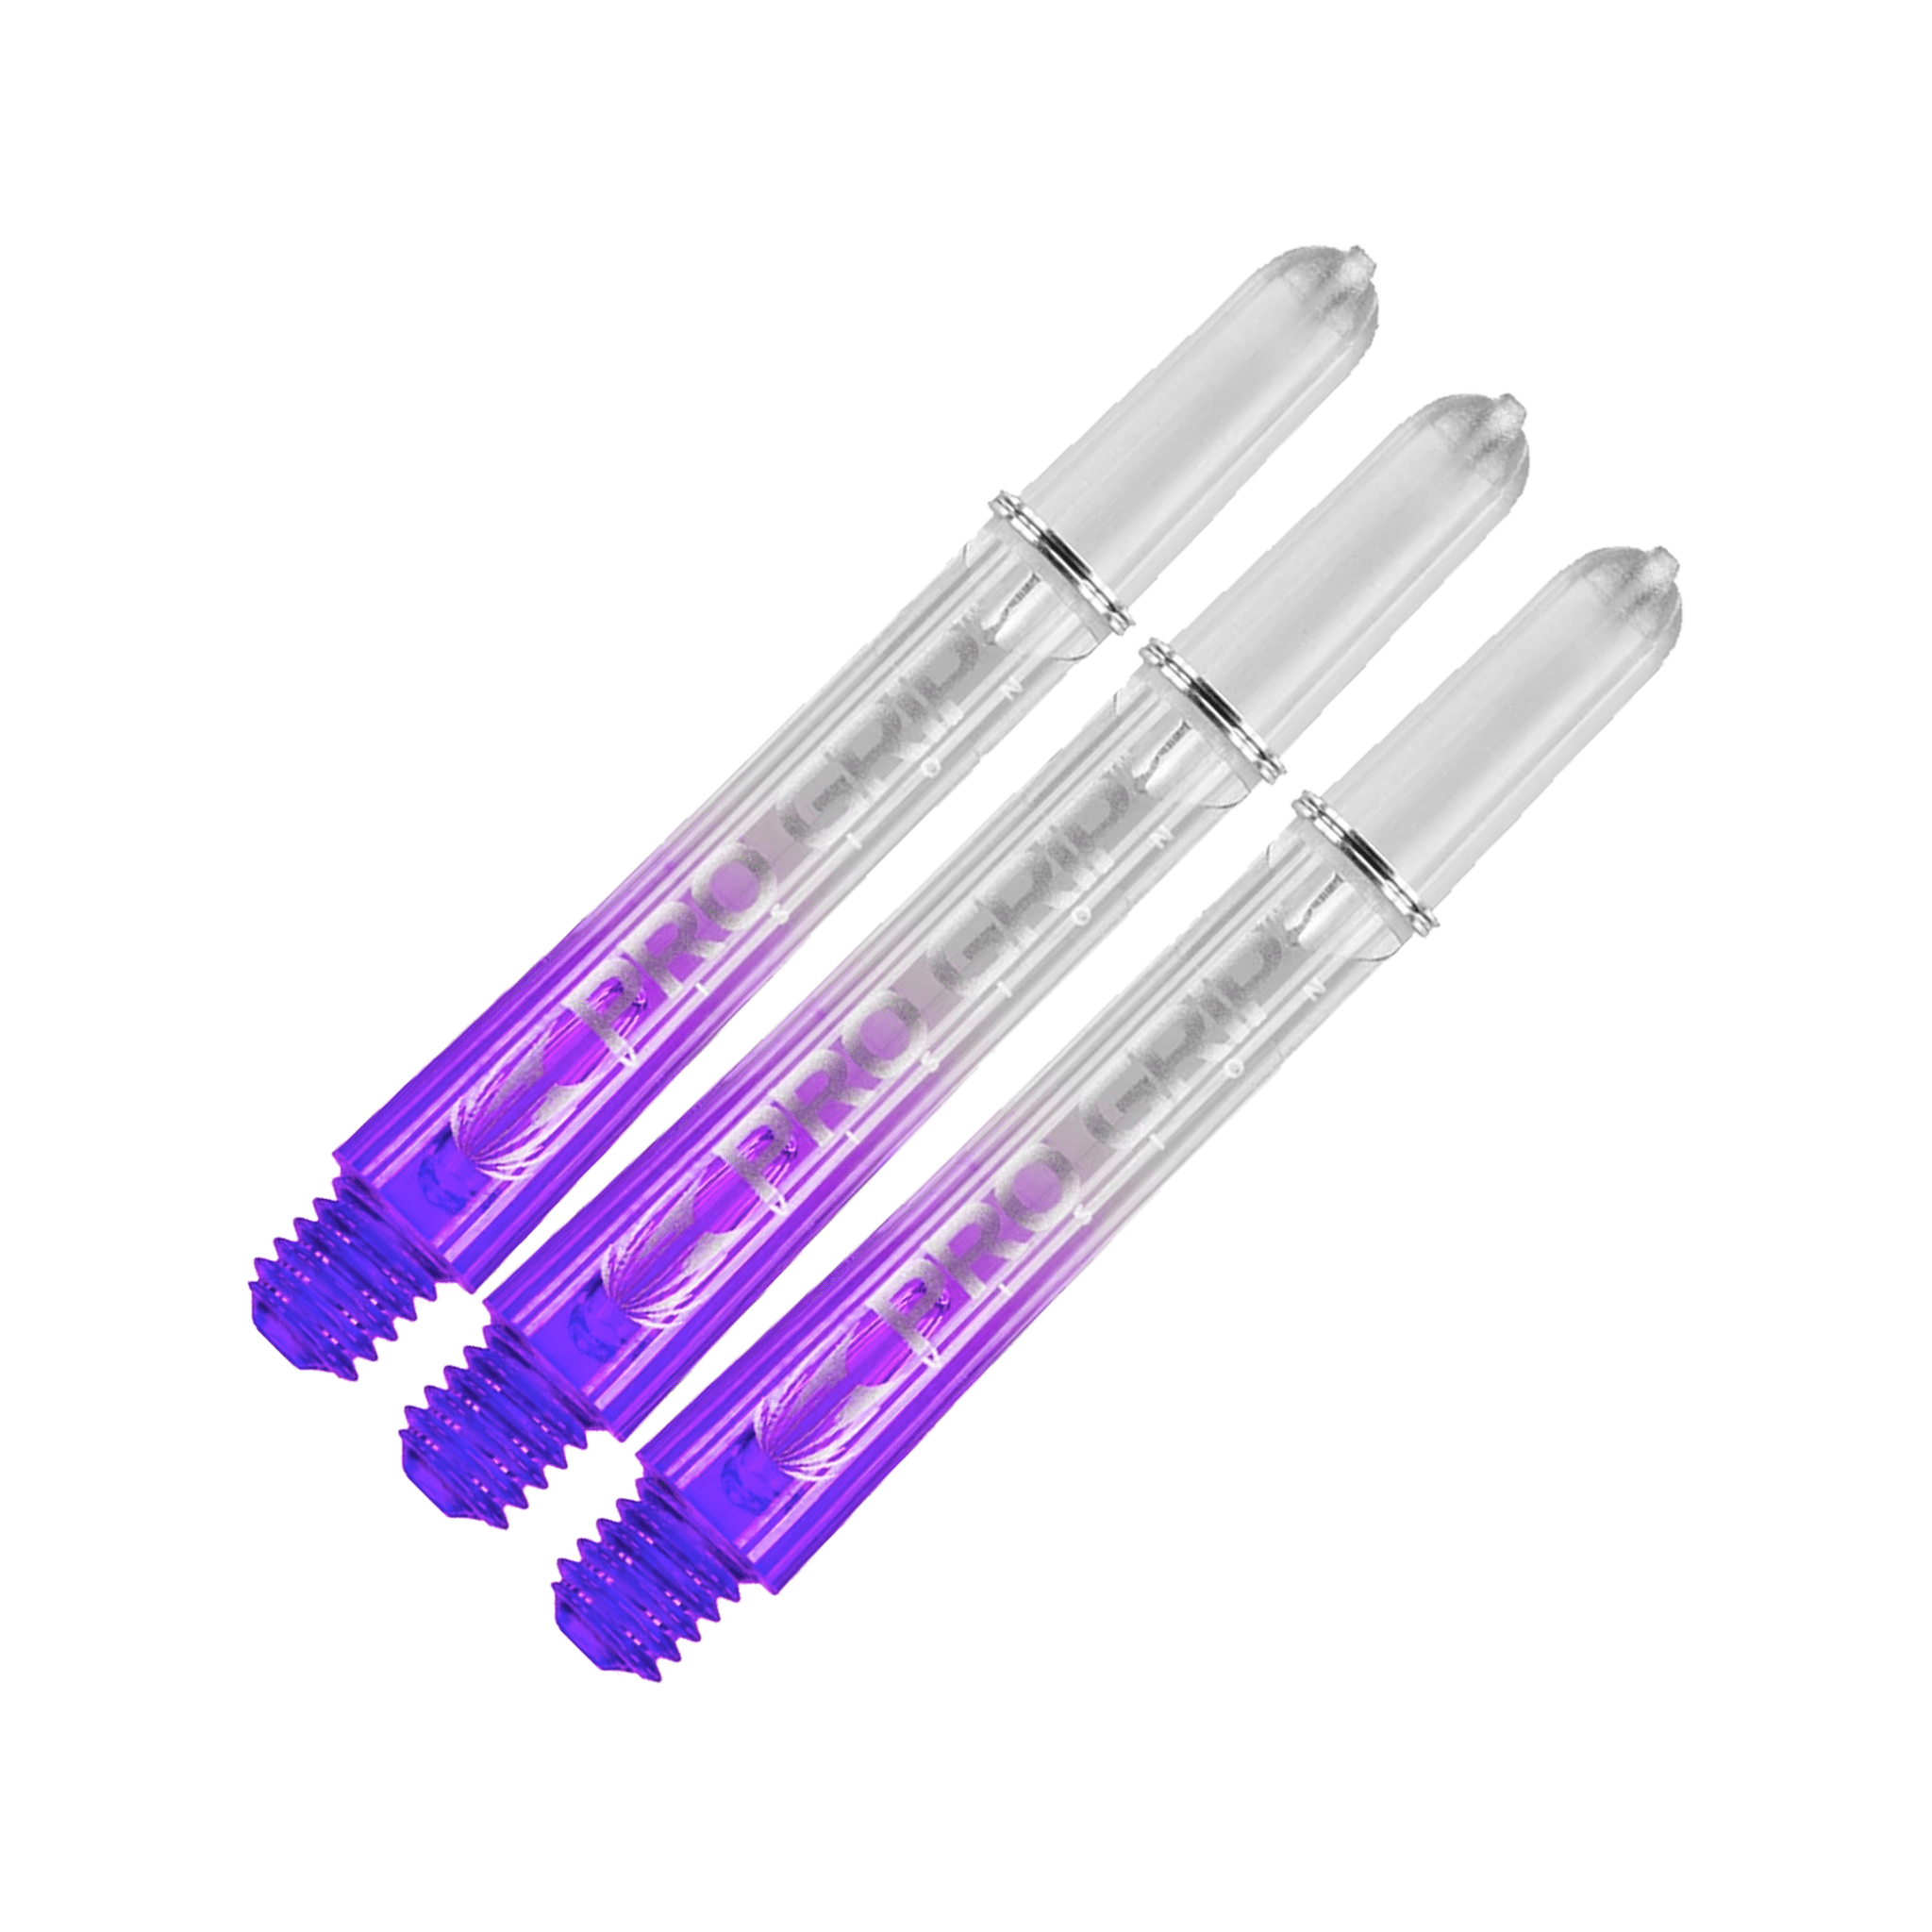 Target Pro Vision - Polycarbonate Dart Shafts Intermediate (41mm) / Purple Shafts